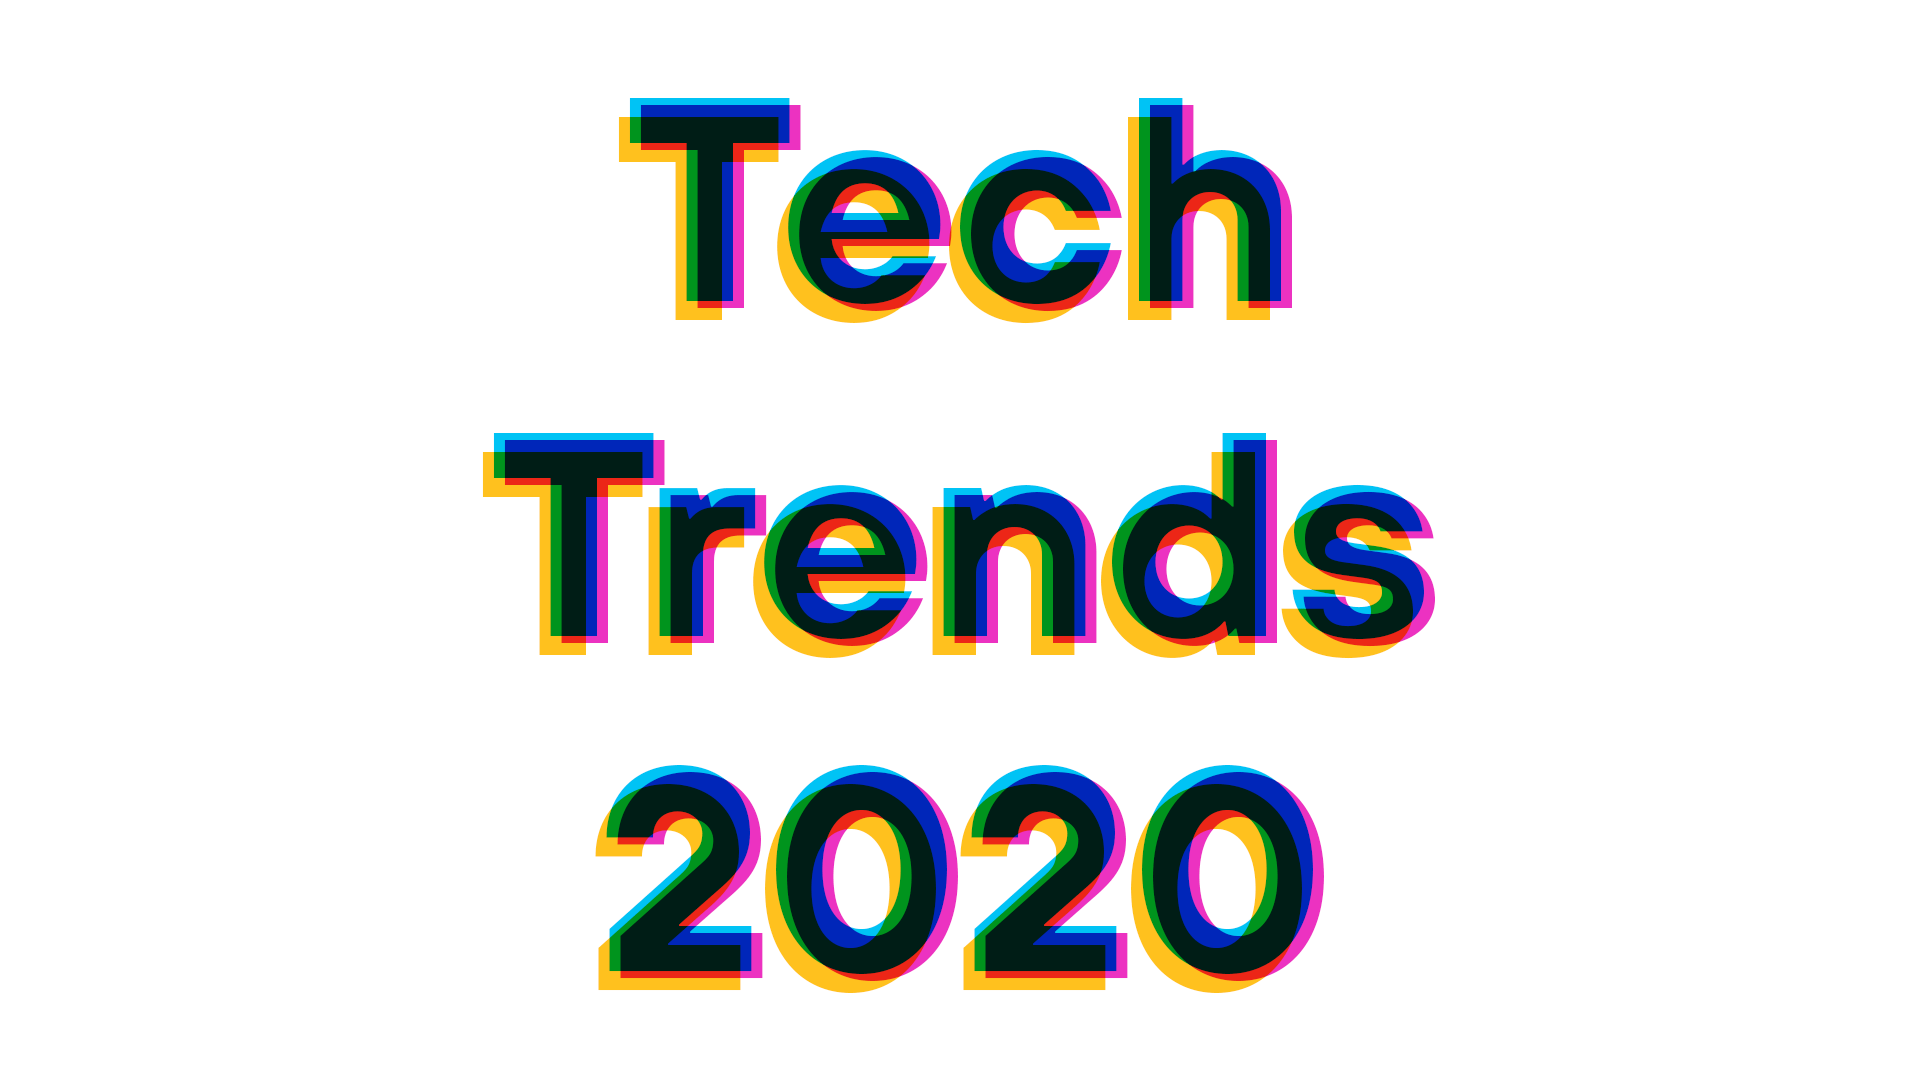 technolog trends 2020 info